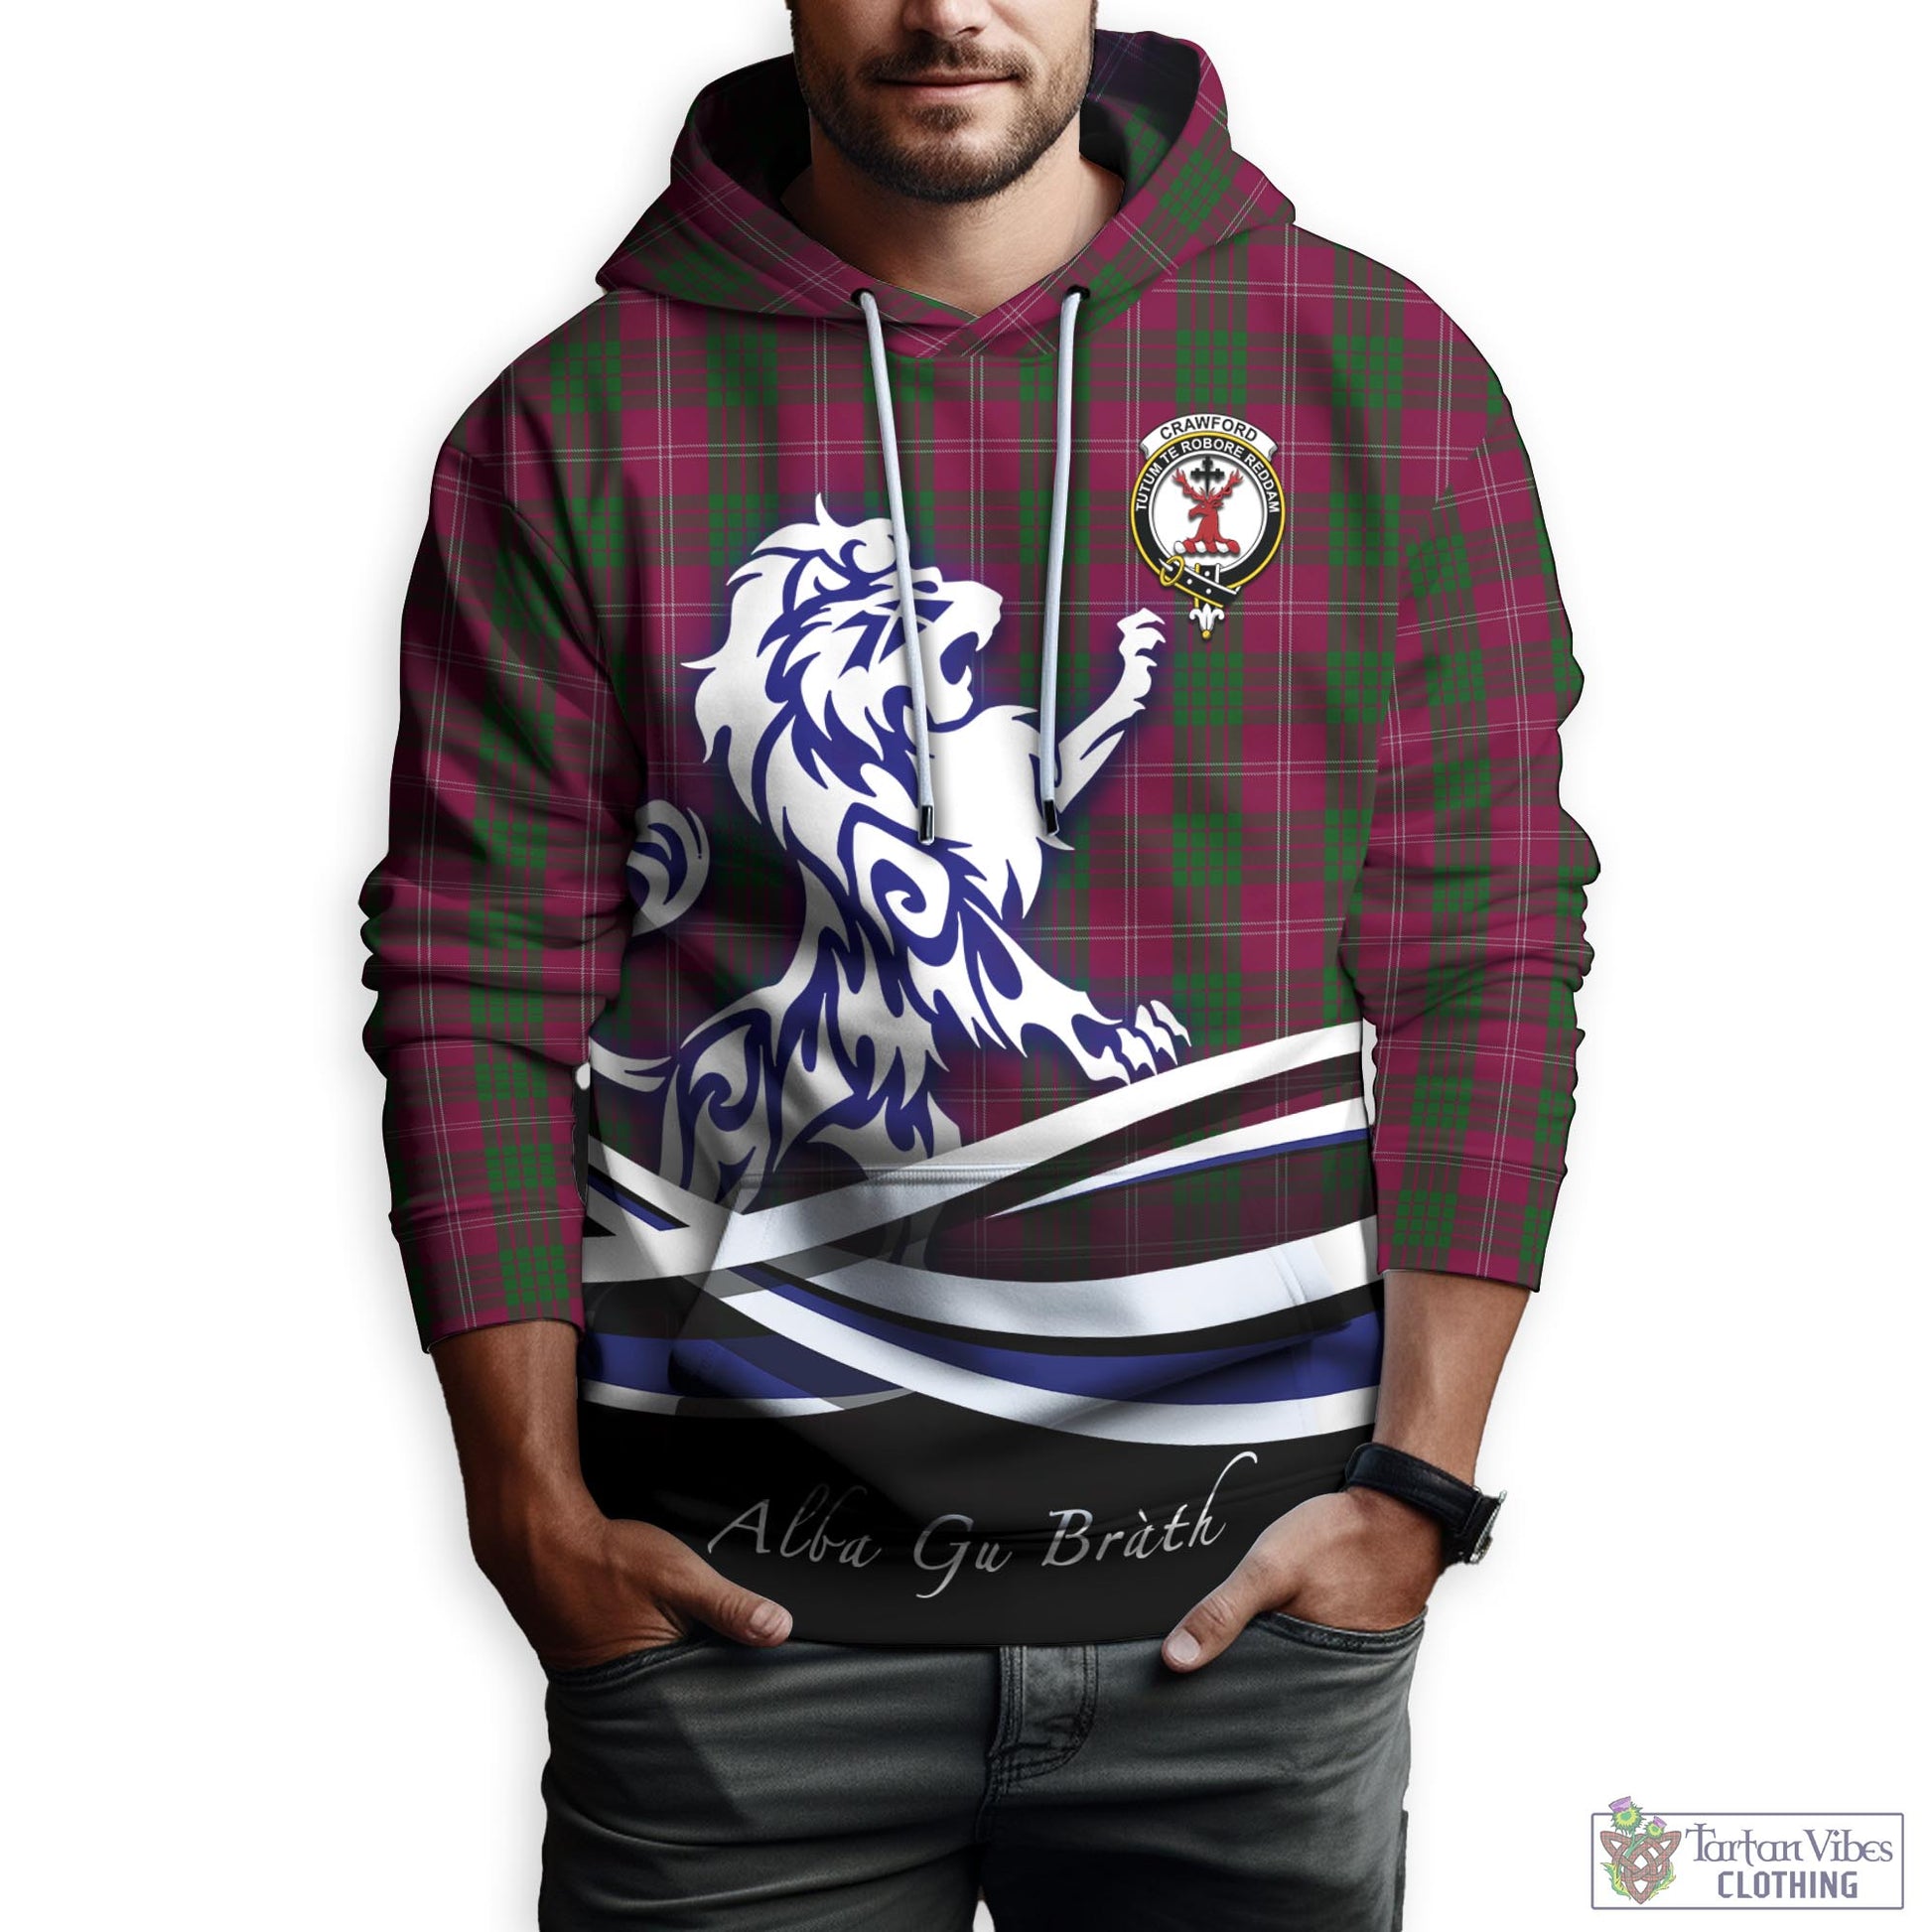 crawford-tartan-hoodie-with-alba-gu-brath-regal-lion-emblem